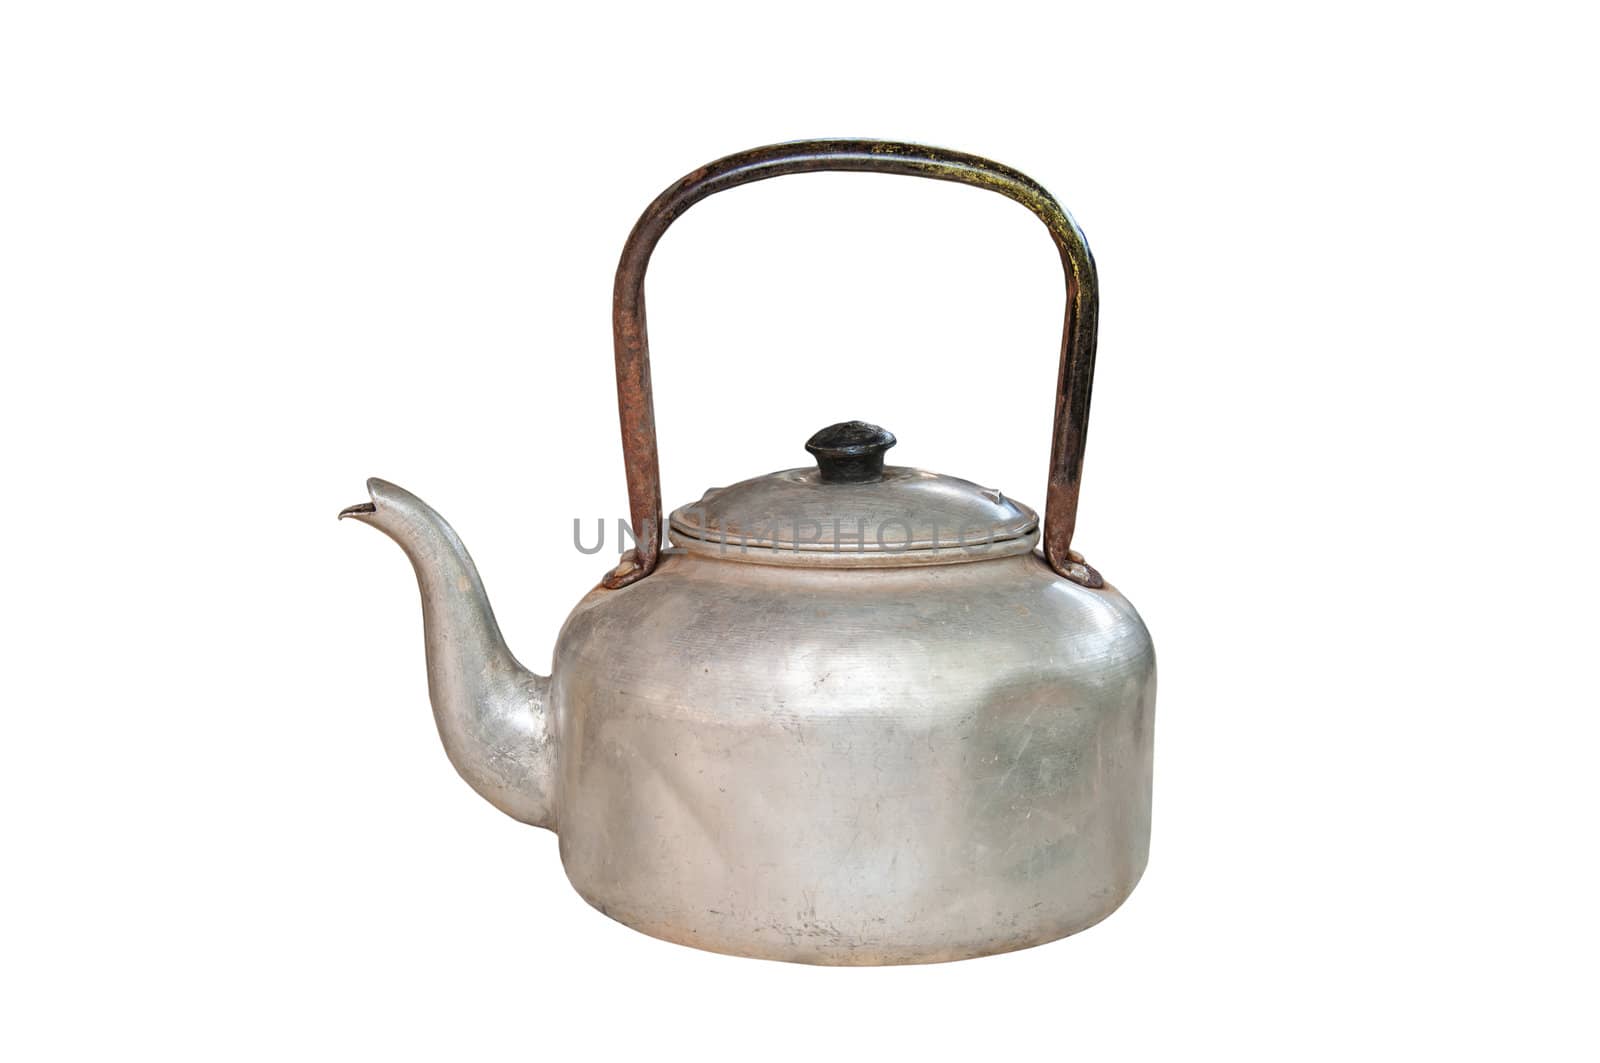 Old teapot by gubgib